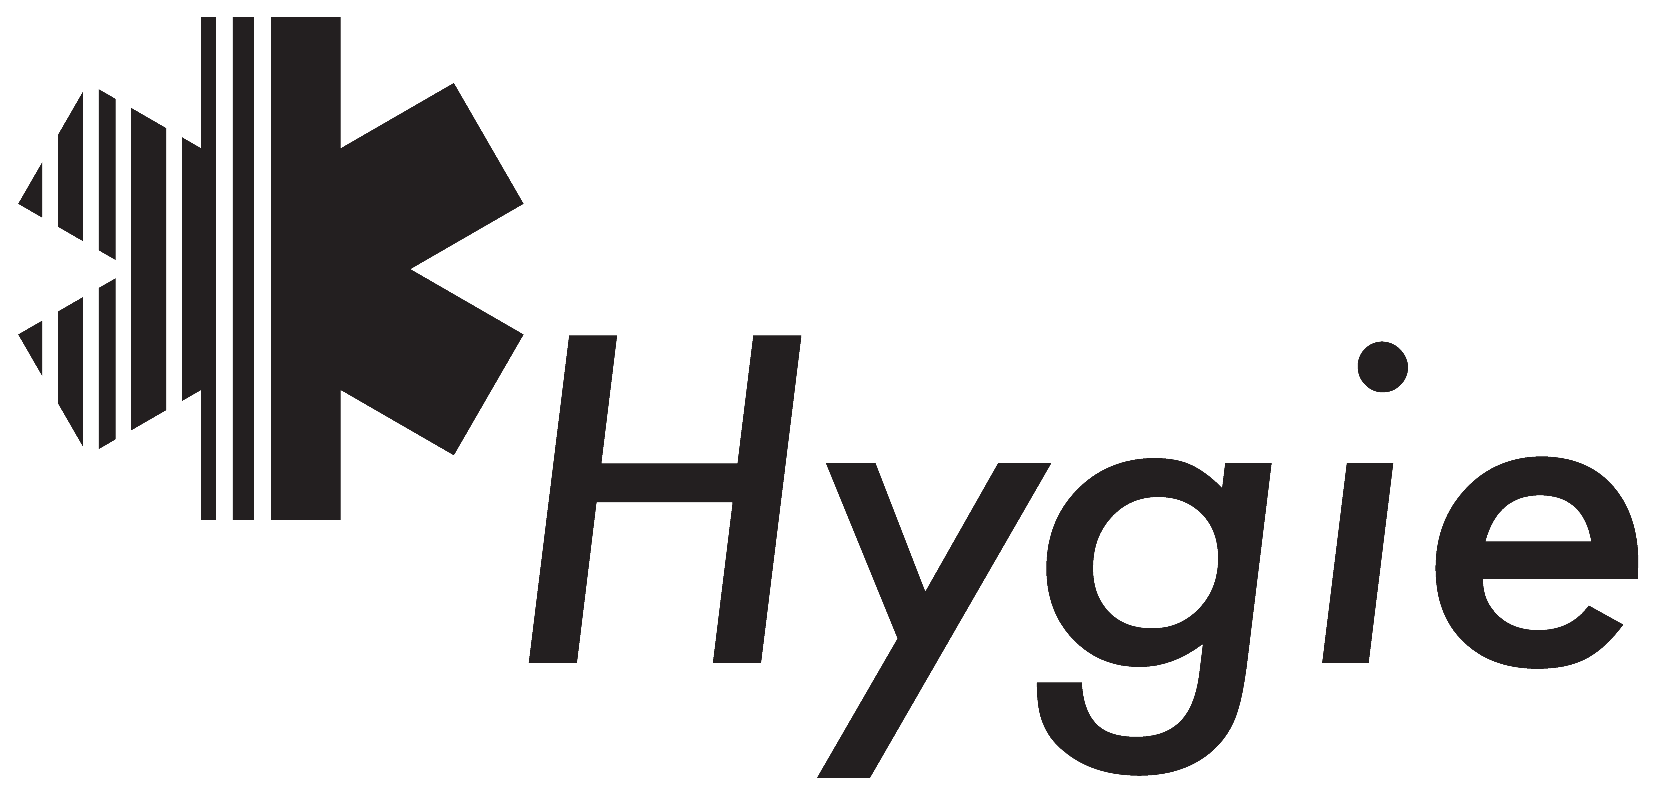 logo Hygie